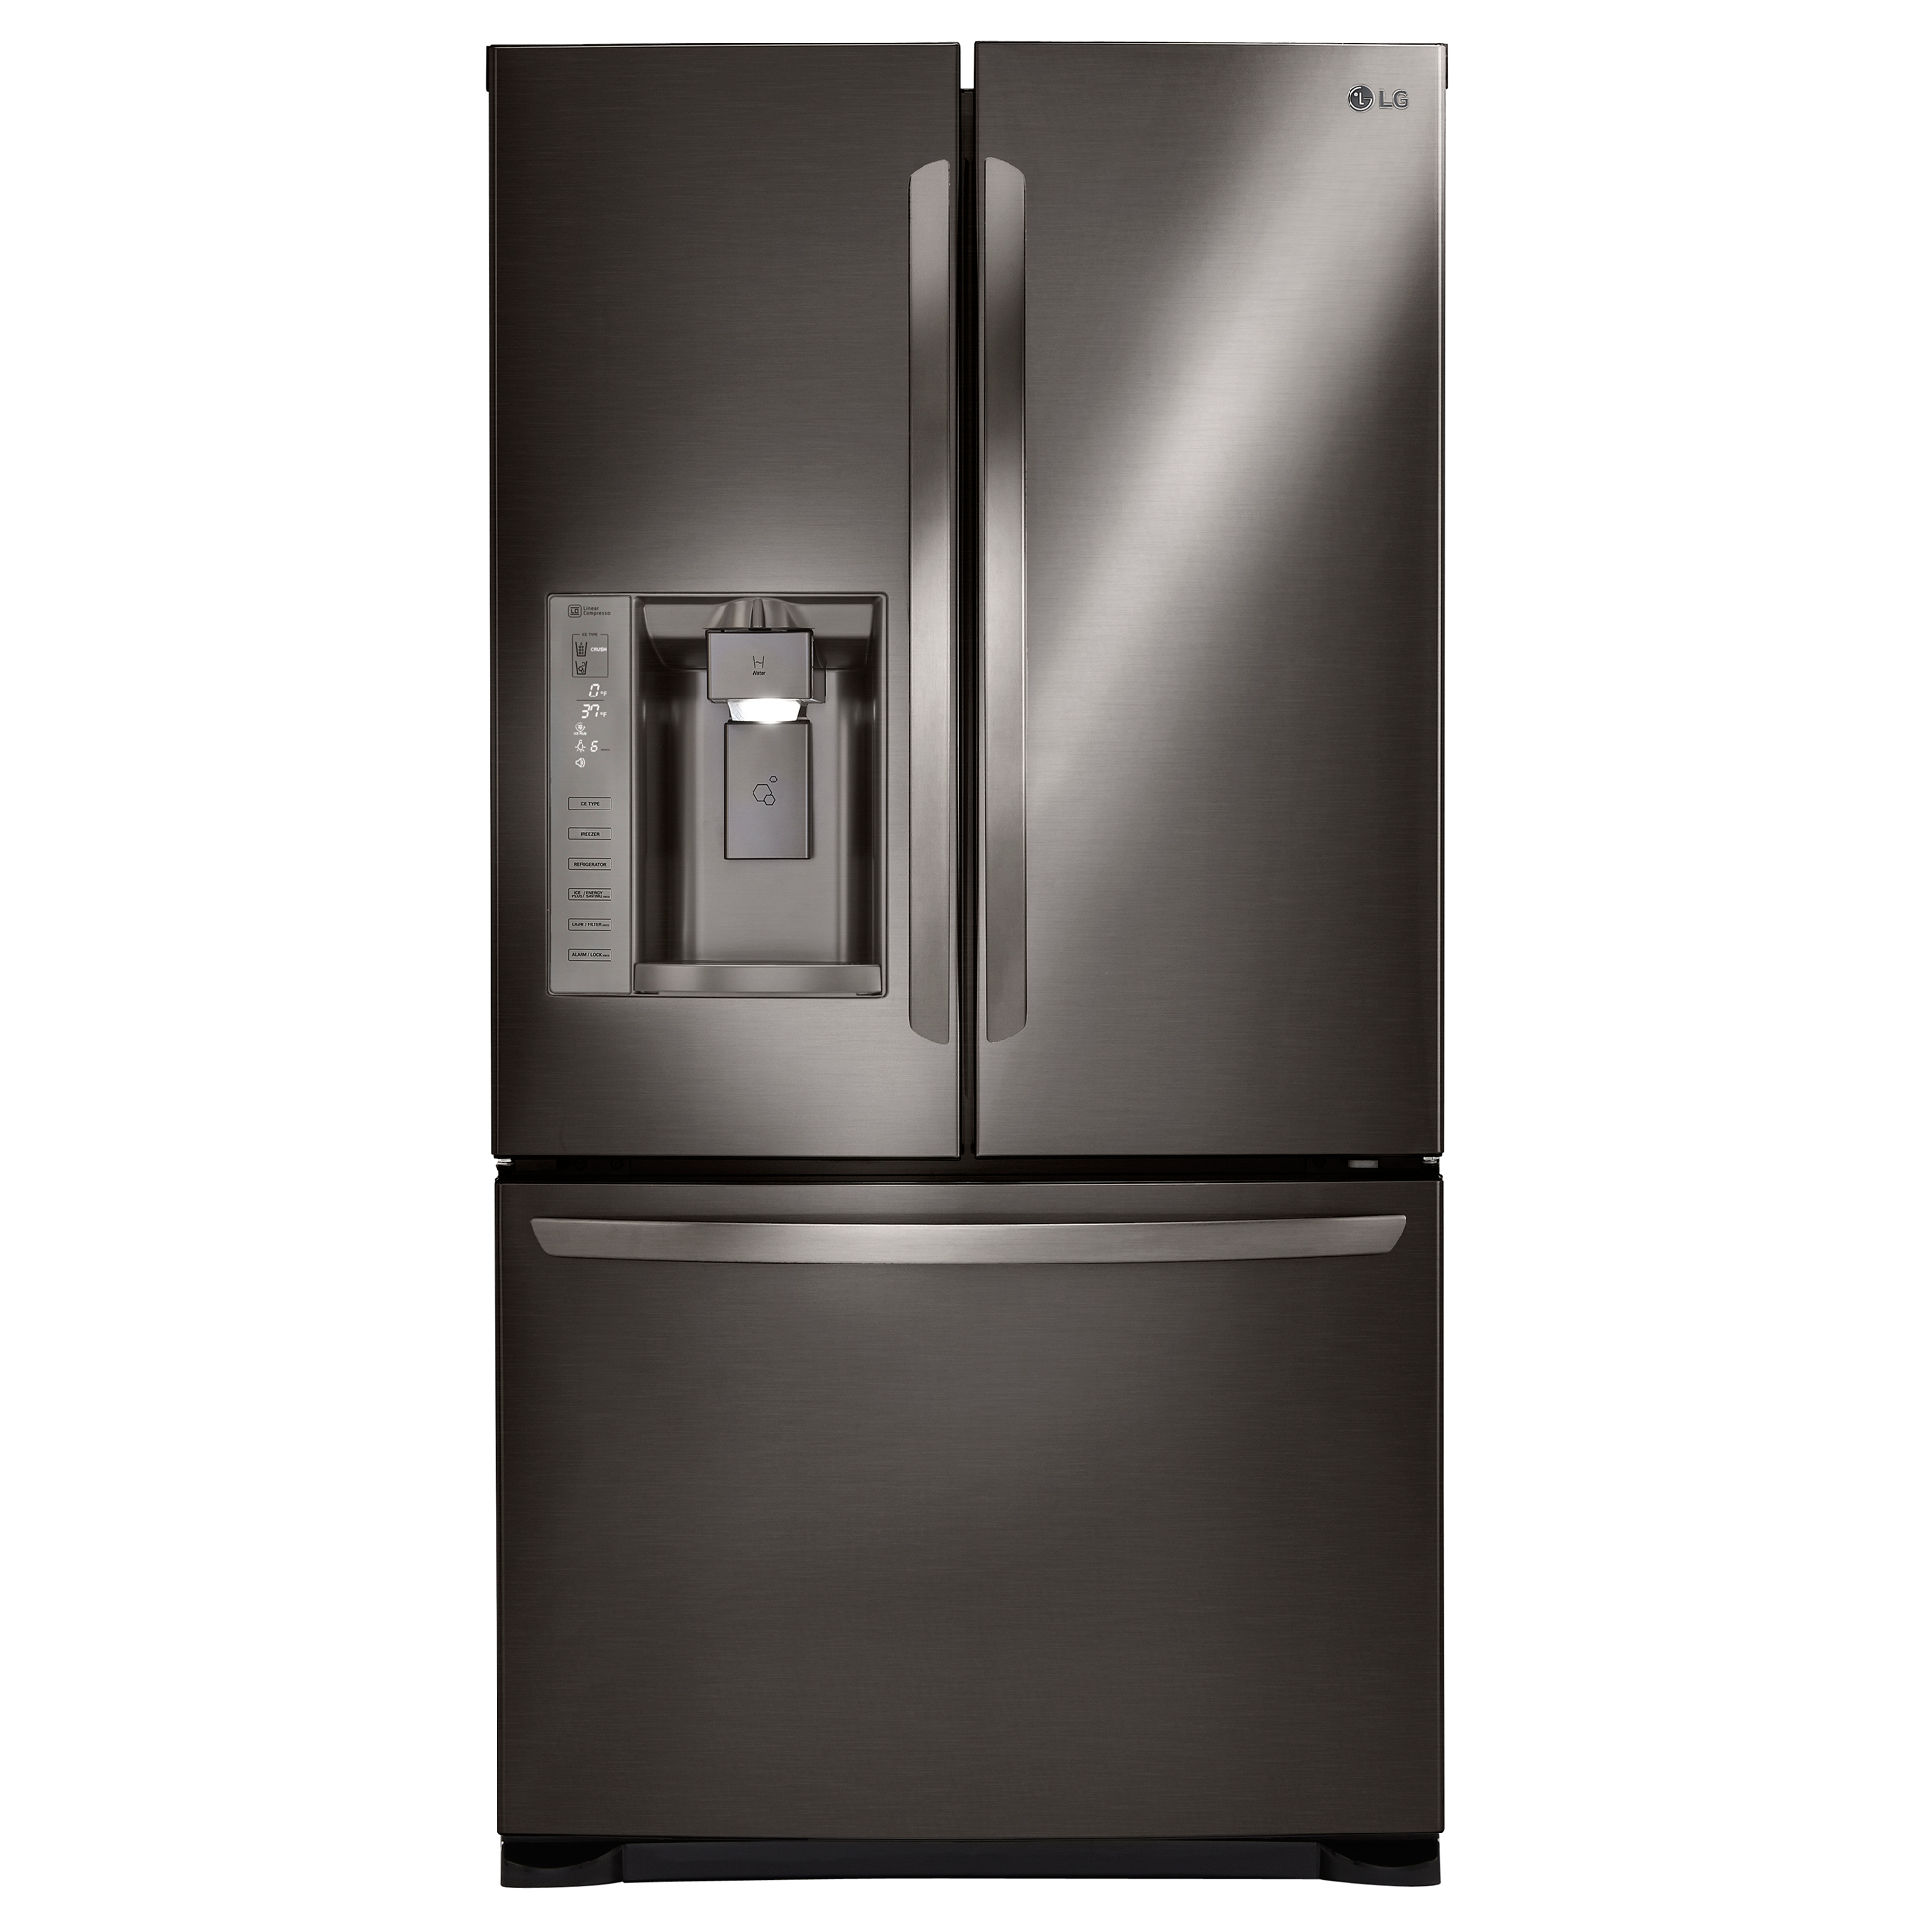 LG LFX25973D 24.1 cu. ft. French Door BottomFreezer Refrigerator w/Dual IceMaker Black Stainless